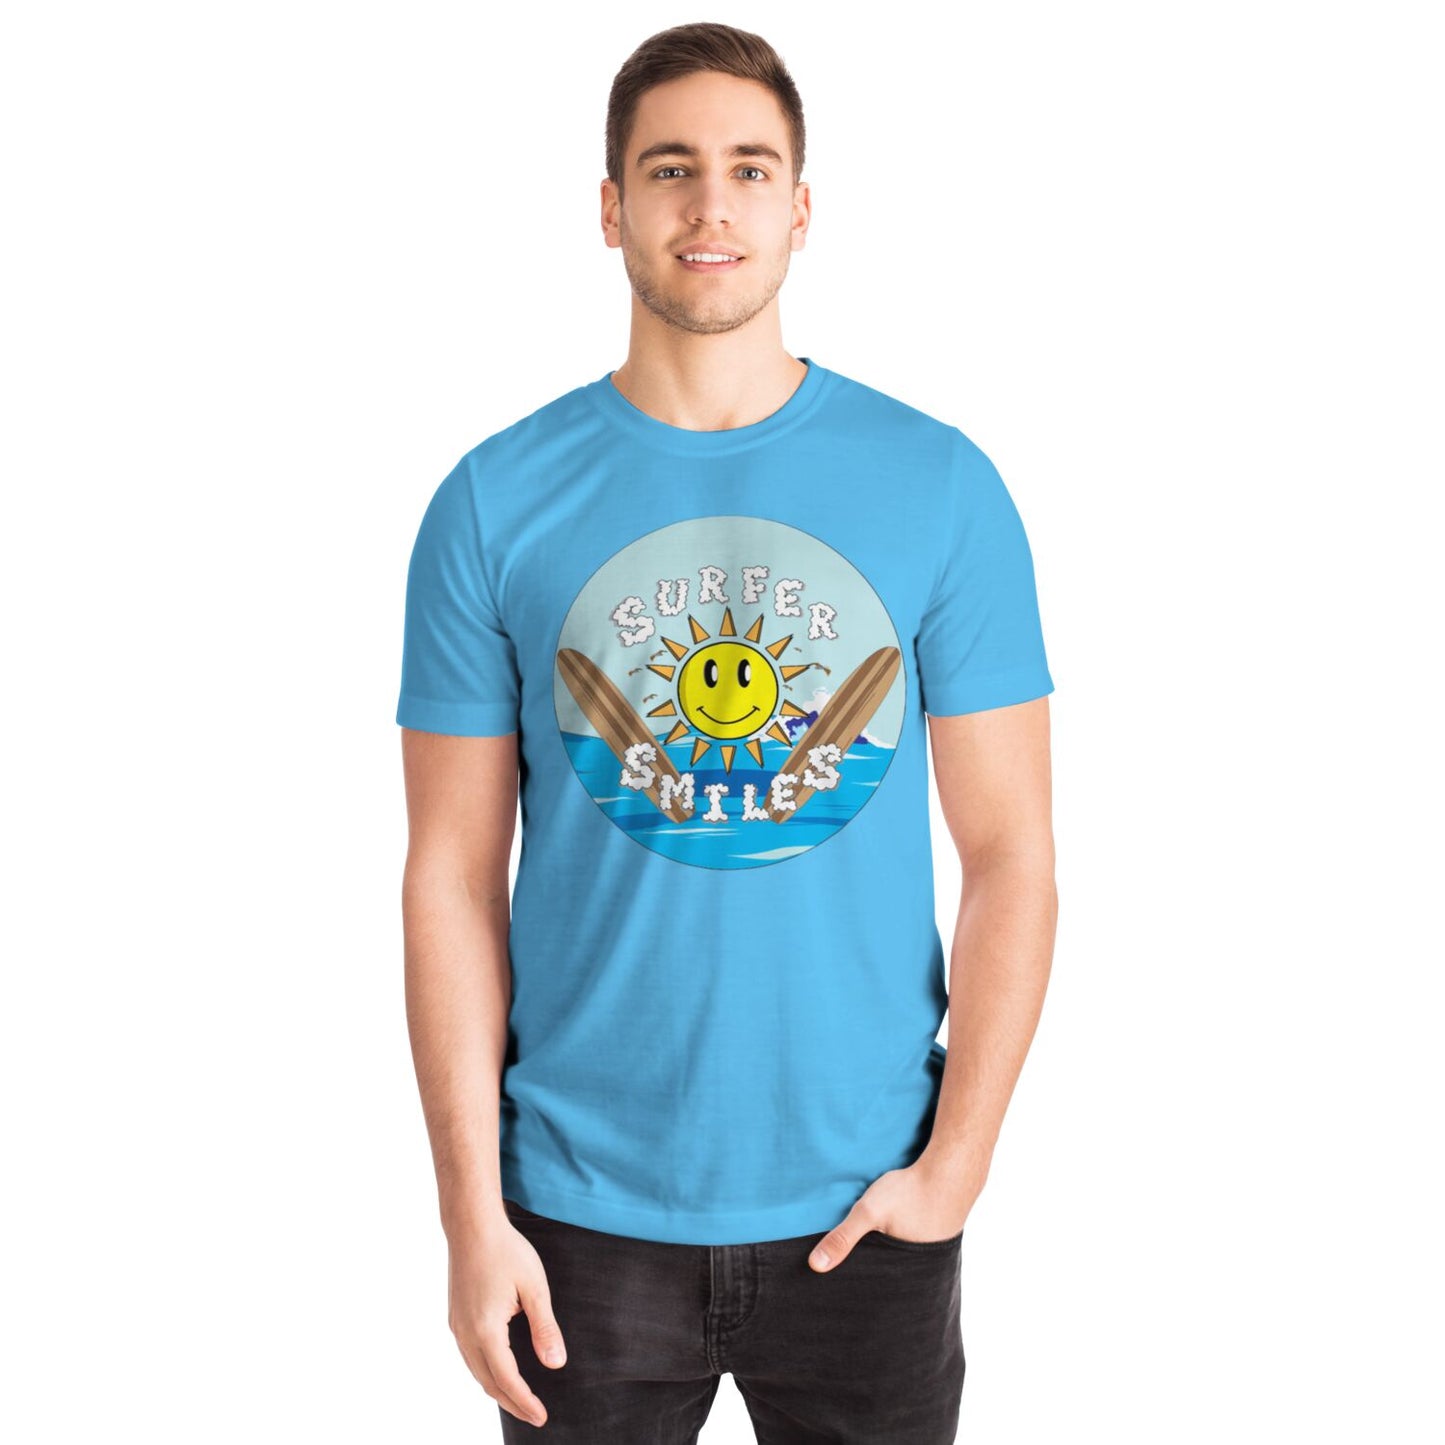 Surfer Smiles T-shirt Blue